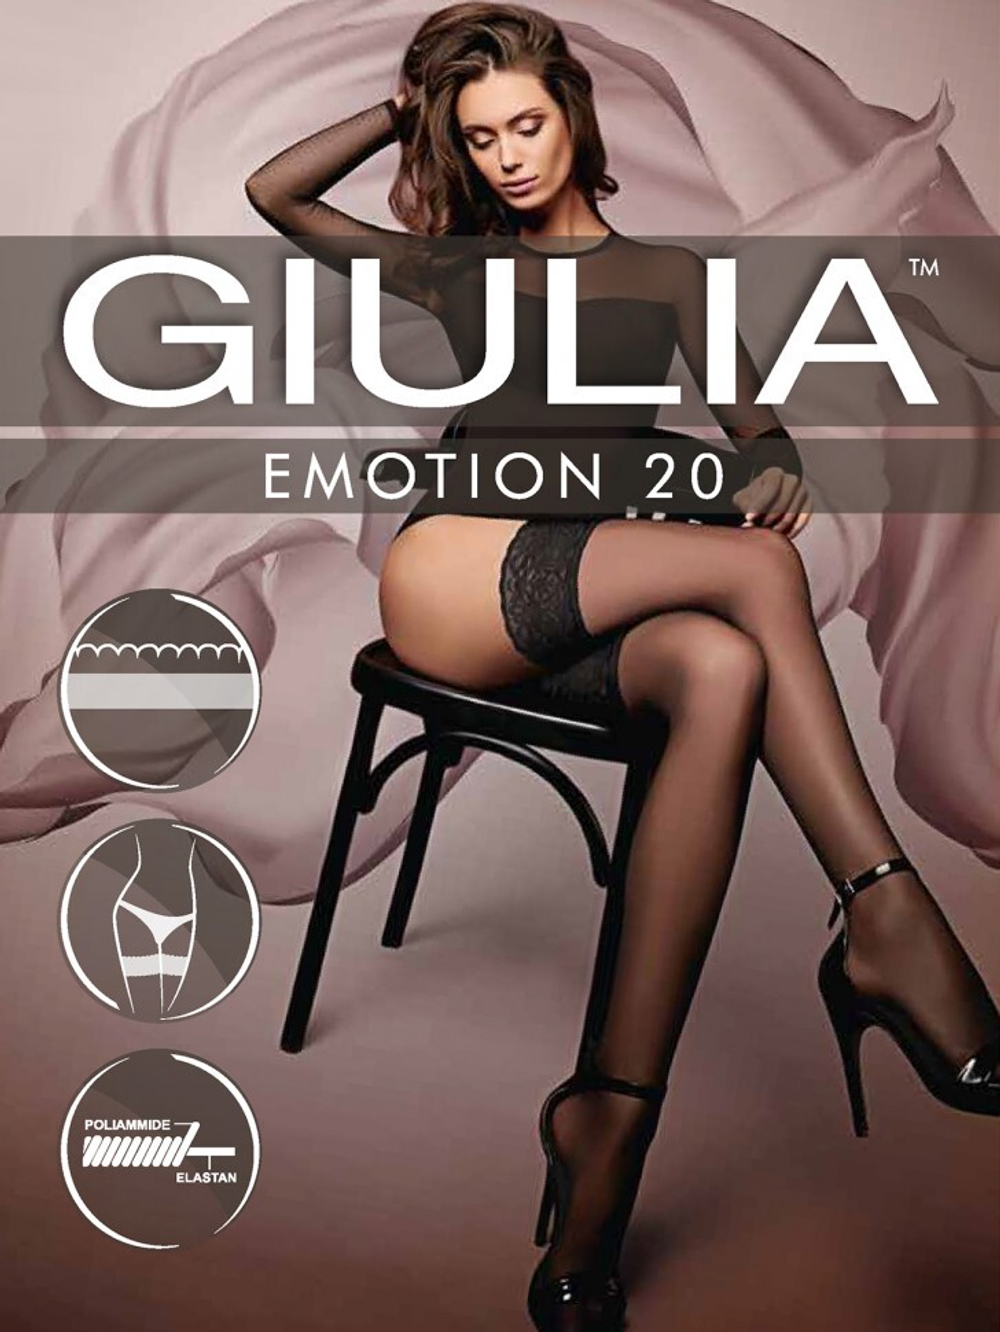 Чулки Emotion 20 Giulia